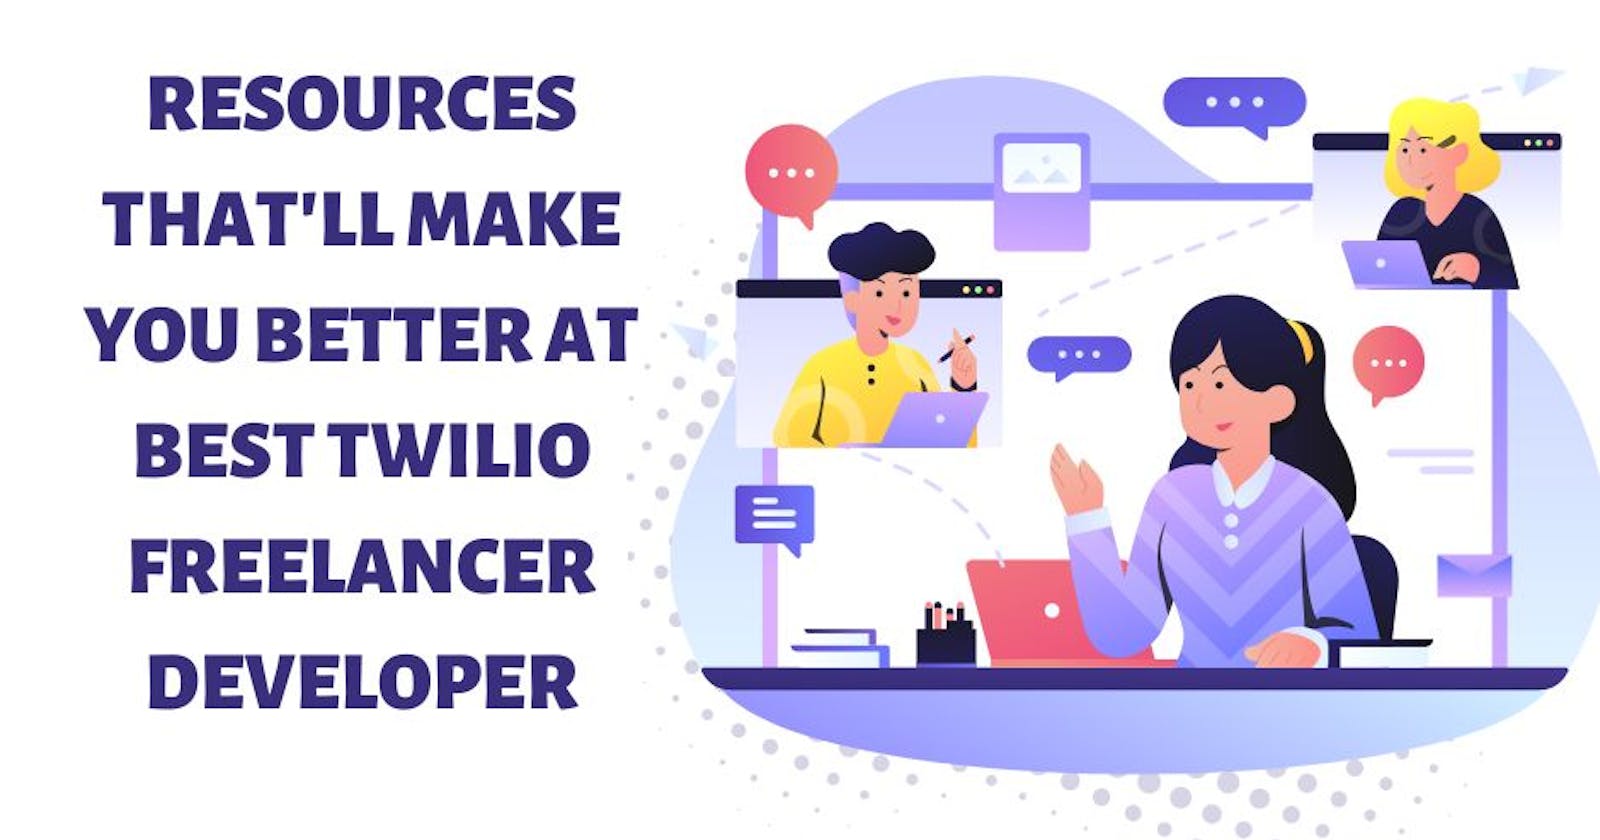 Resources That'll Make You Better at Best Twilio Freelancer Developer